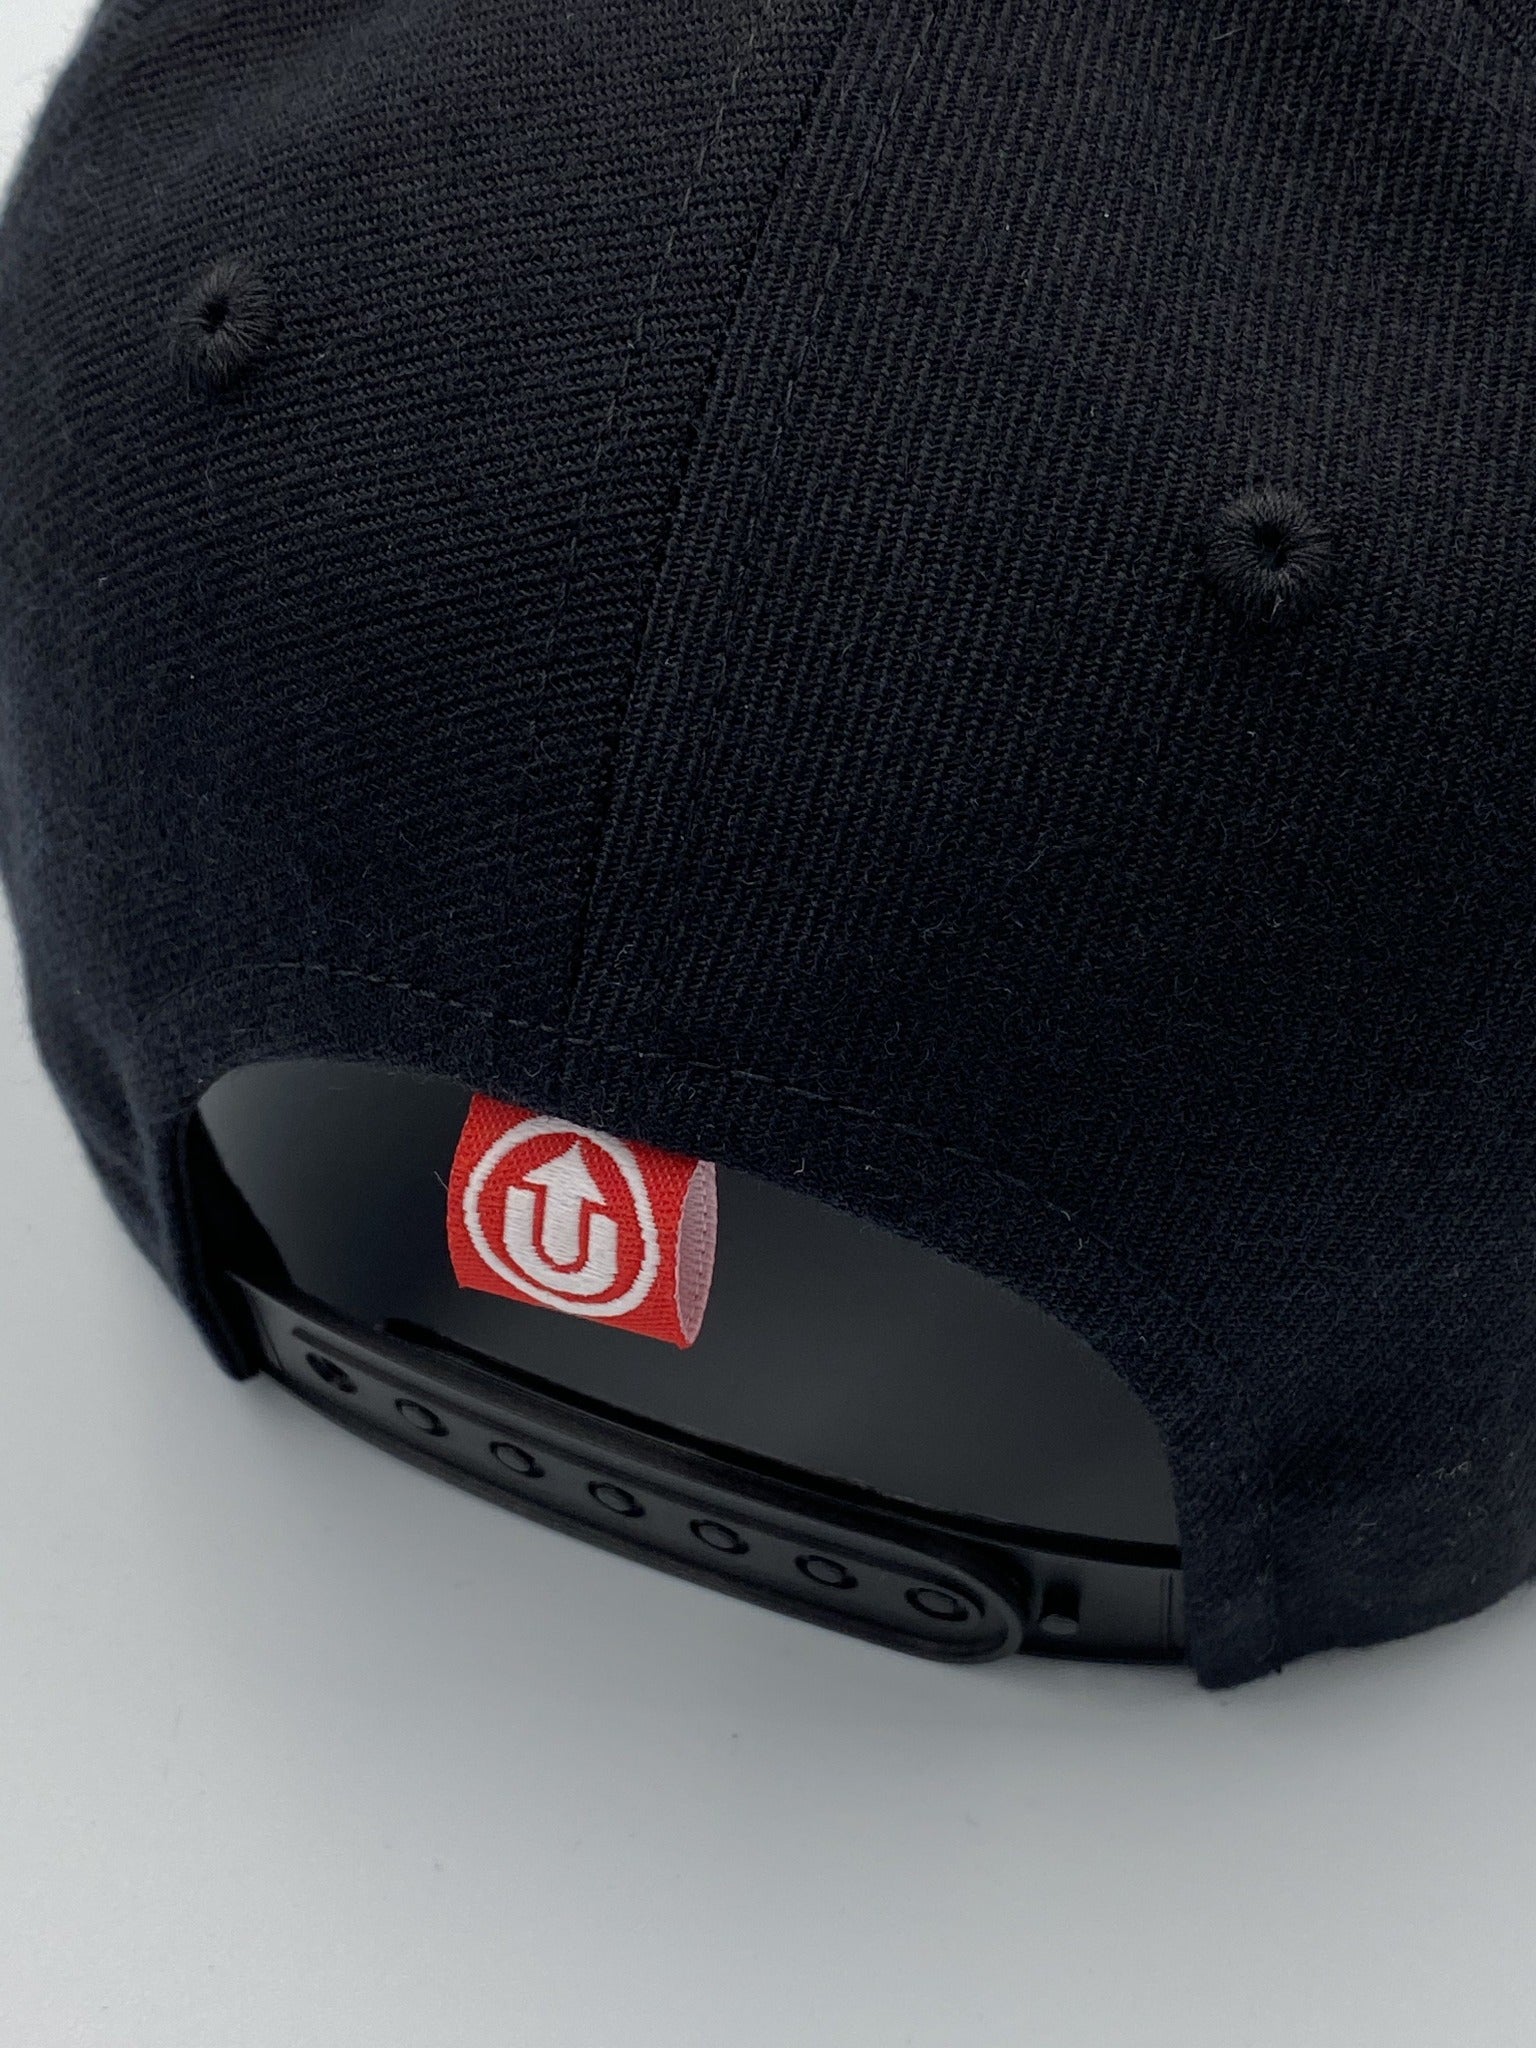 SPINBACK Baseball Cap - Black/Black - Headz Up 